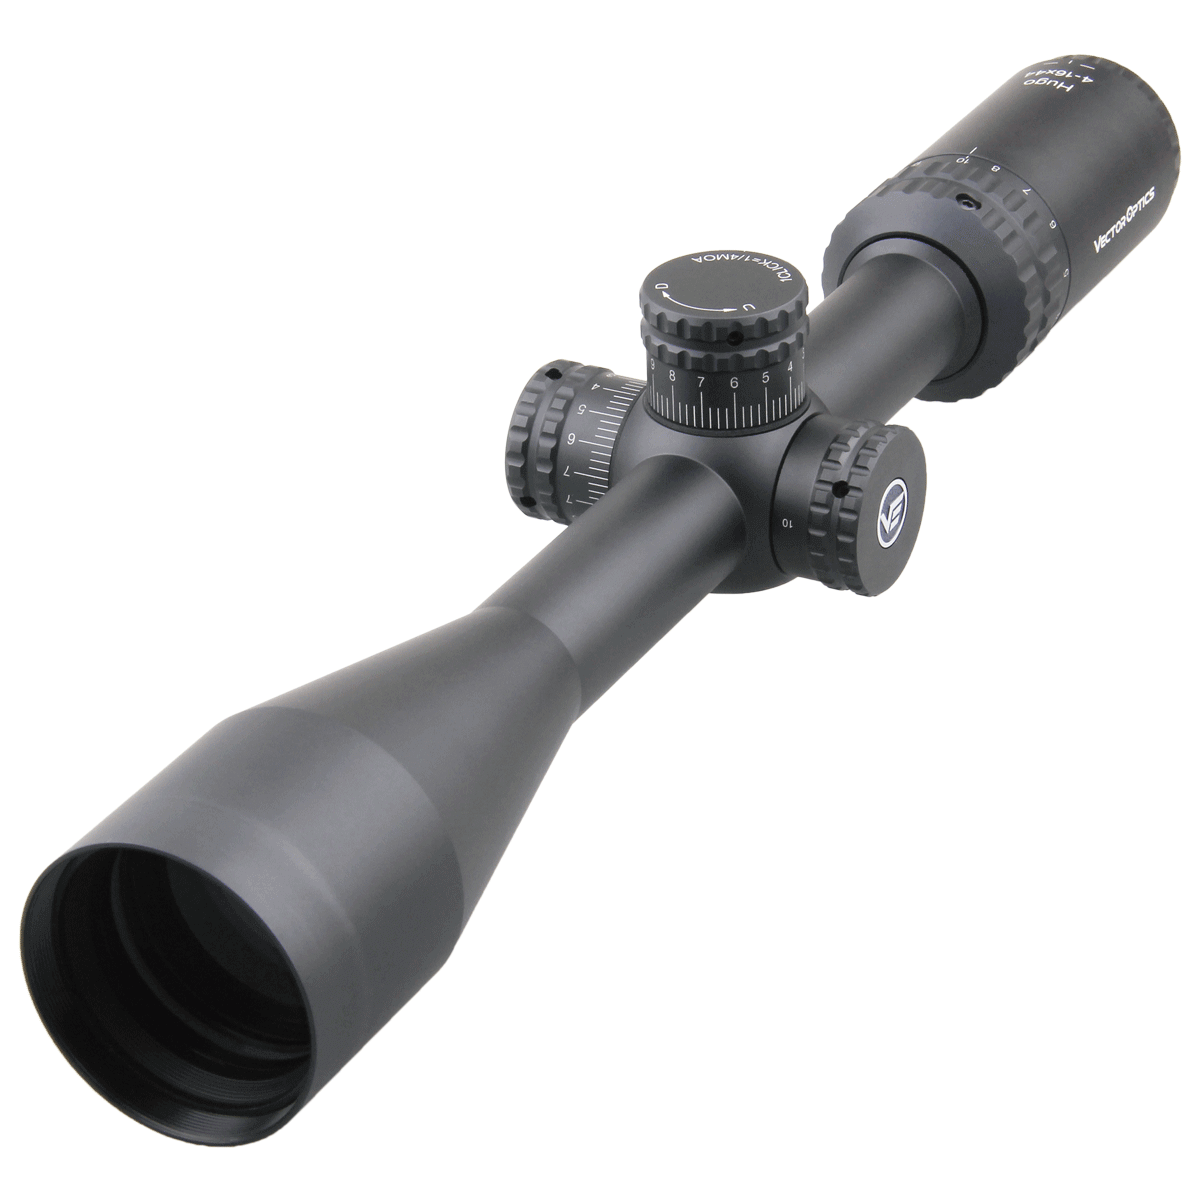 Vector Optics- Hugo. 4-16 x 44 GT SFP Riflescope